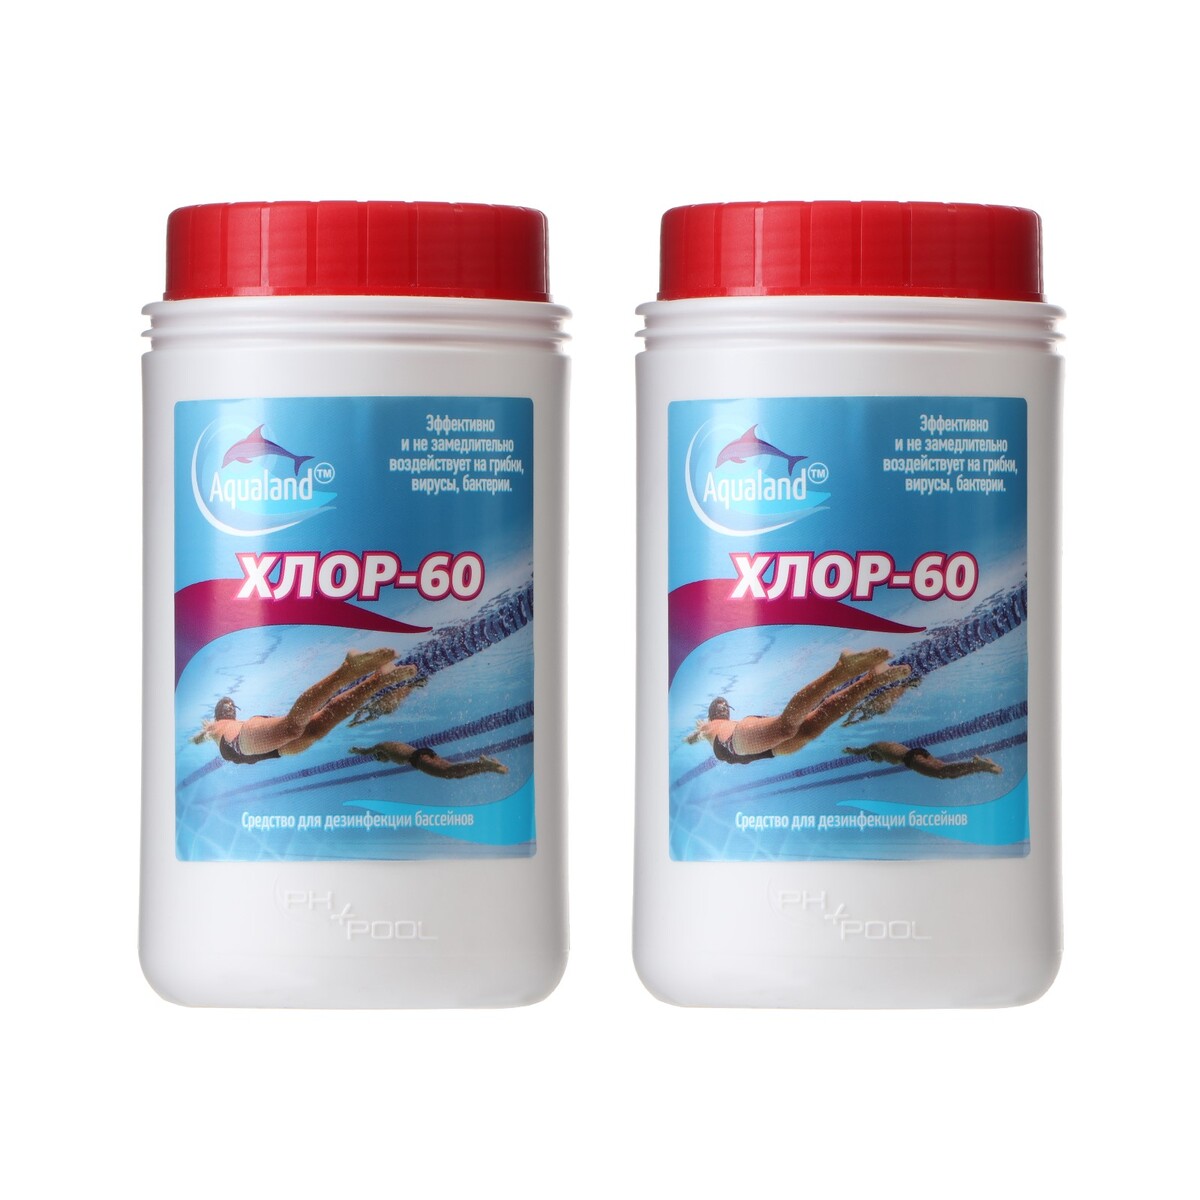 Дезинфицирующее средство aqualand хлор-60, по 1 кг, набор 2 шт дезинфицирующее средство део бактер без отдушки 1 л